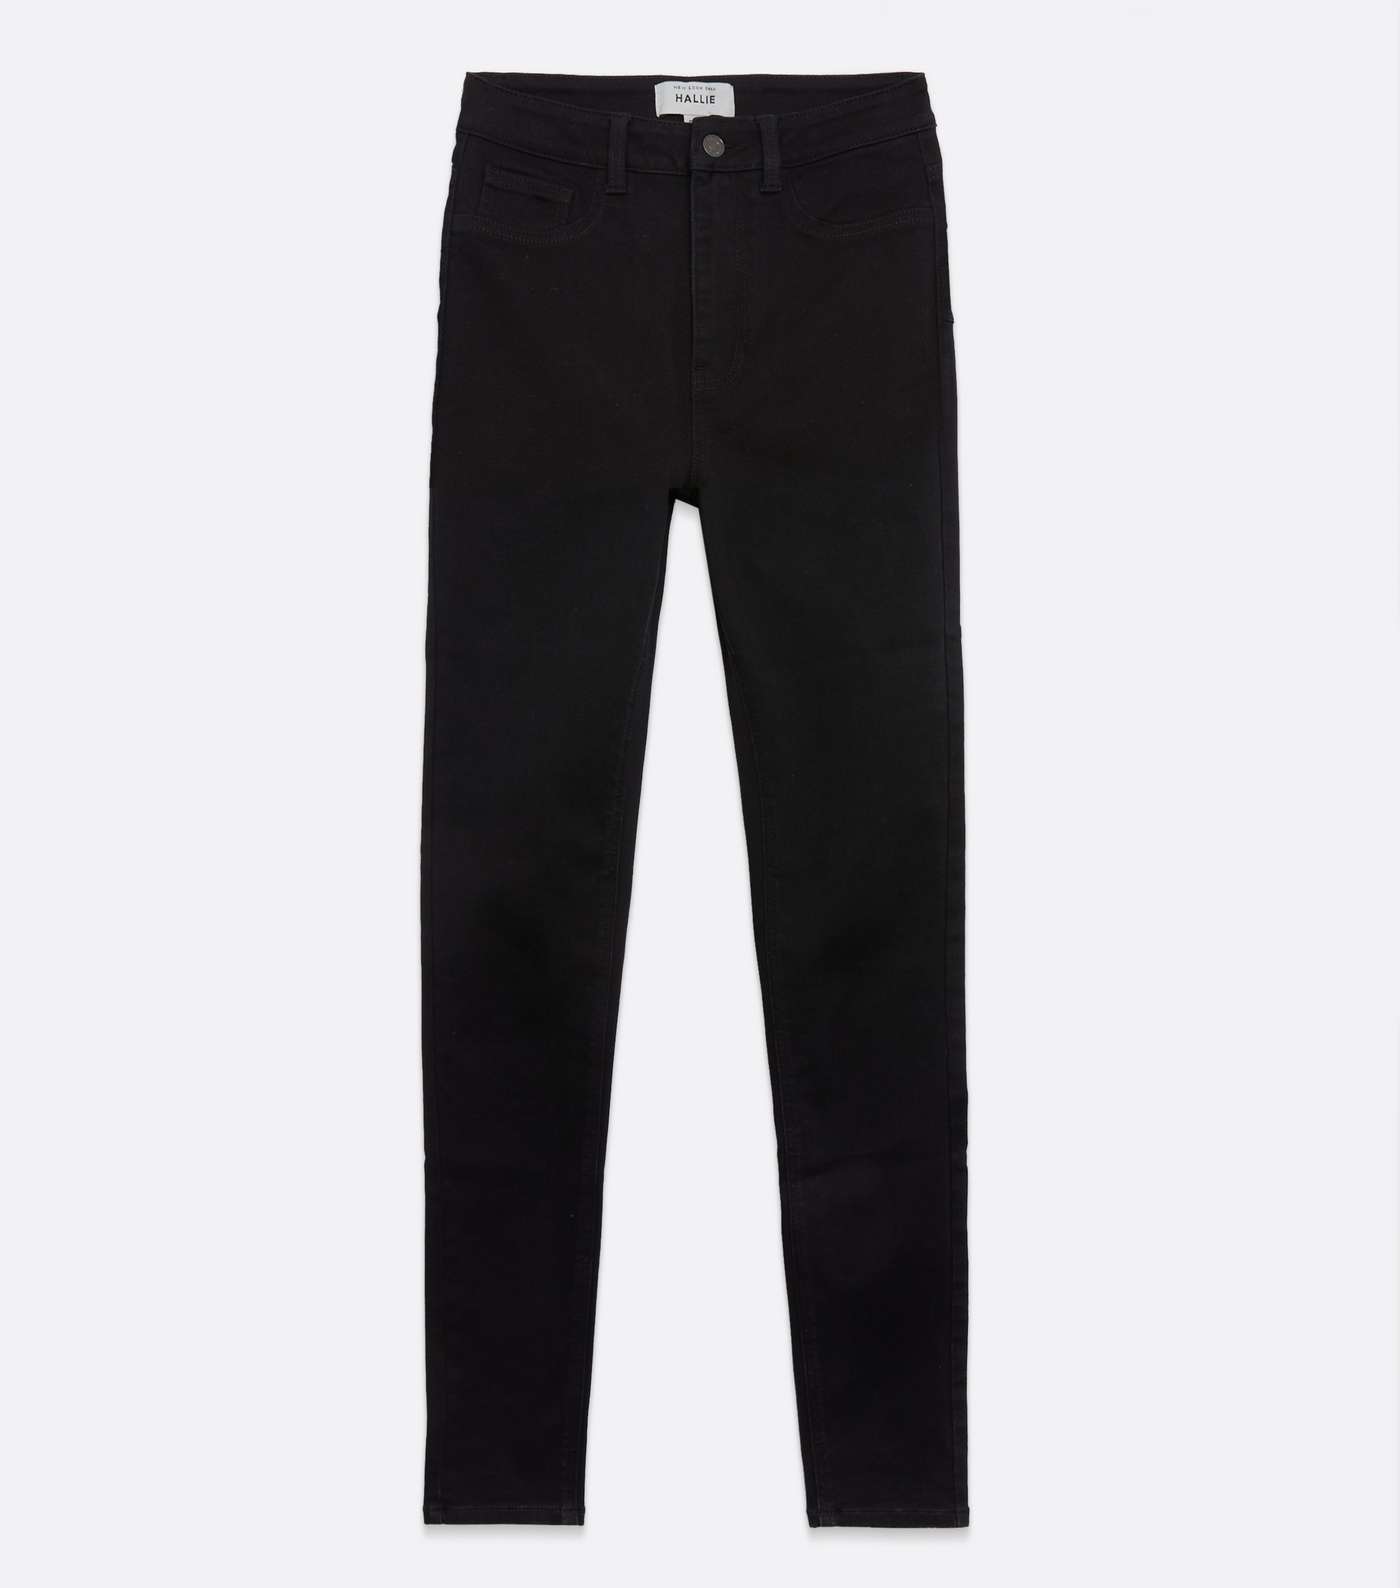 Tall Black Dark Wash High Waist Hallie Super Skinny Jeans Image 5